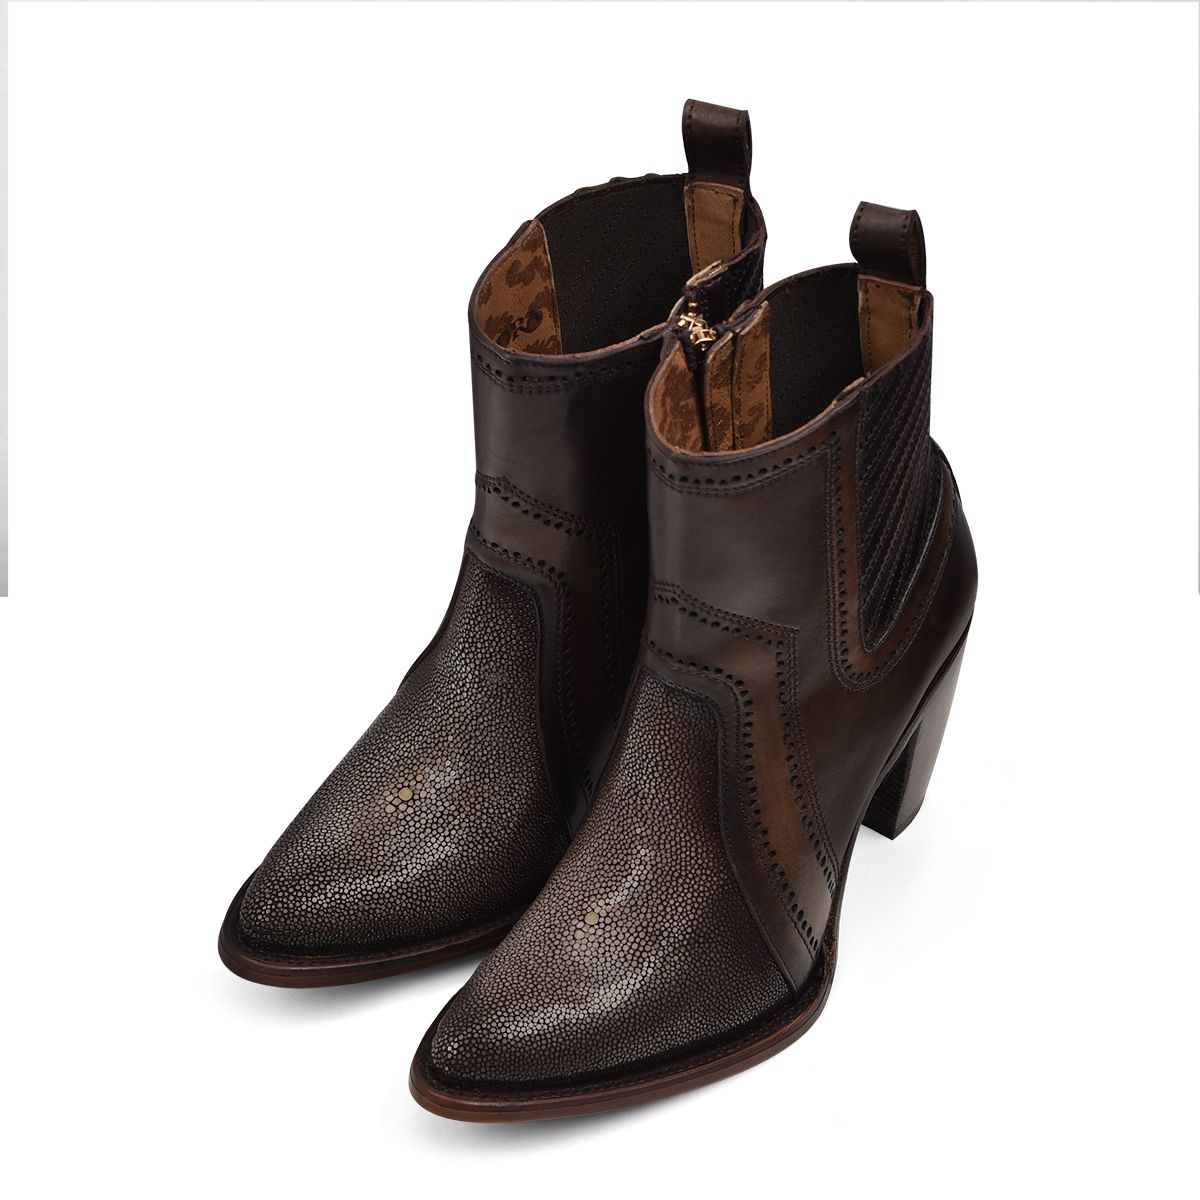 3F94MA - Cuadra brown fashion Paris Texas stingray ankle boots for women-Kuet.us